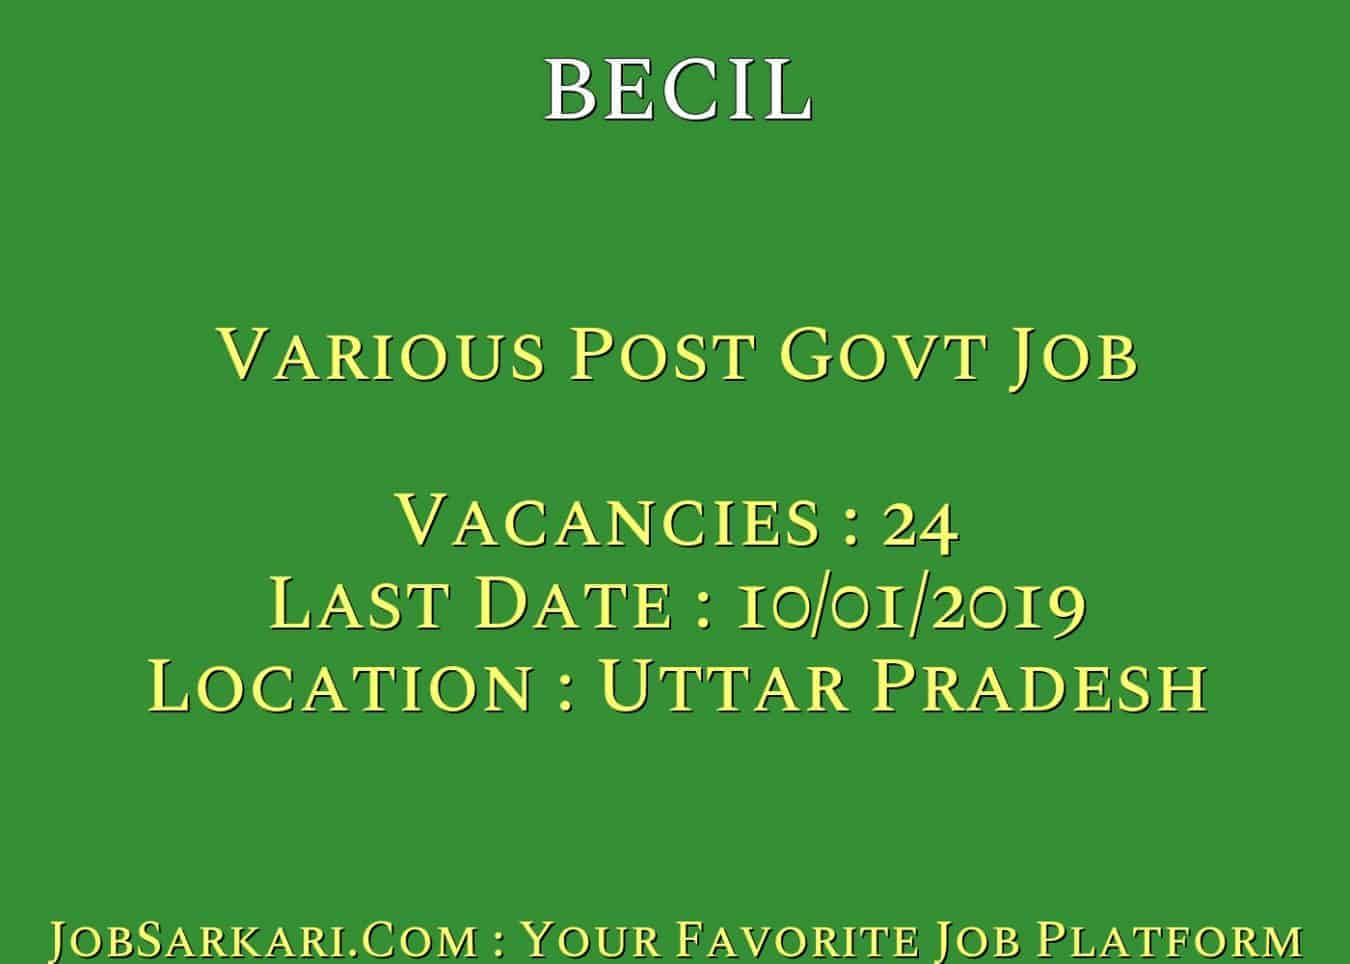 BECIL Recruitment 2018 For Various Post Govt Job